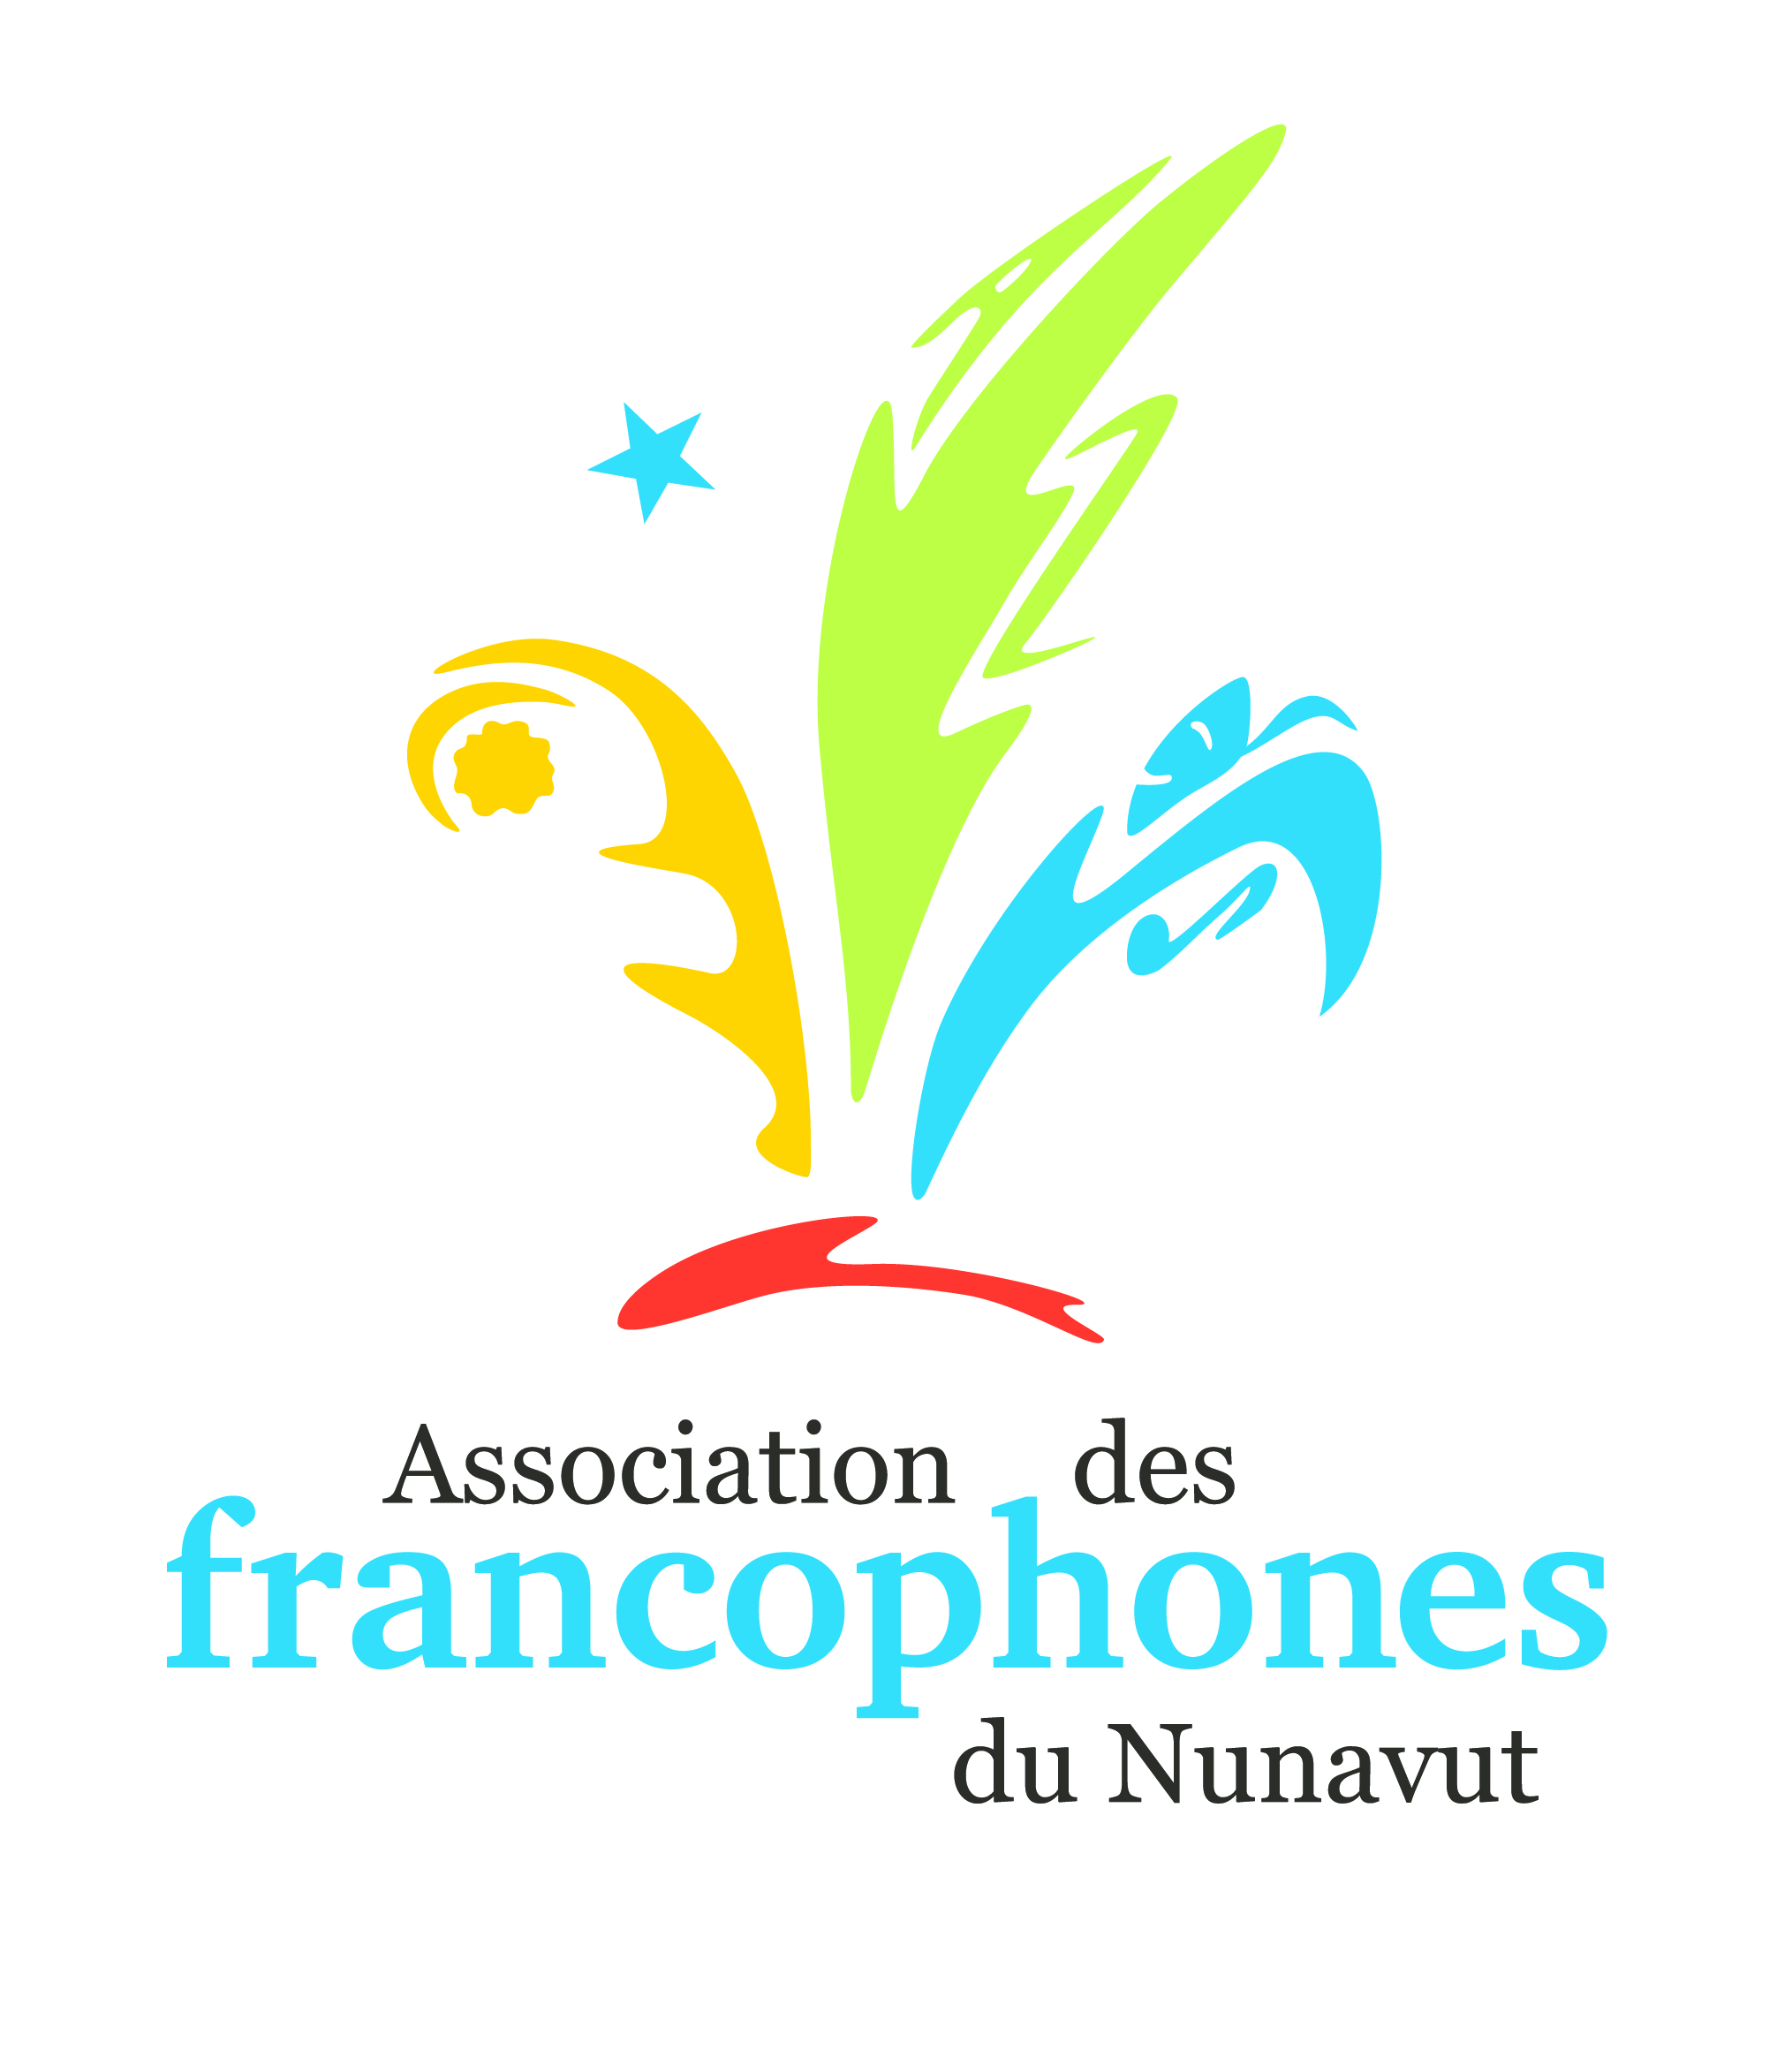 Association des francophones du Nunavut